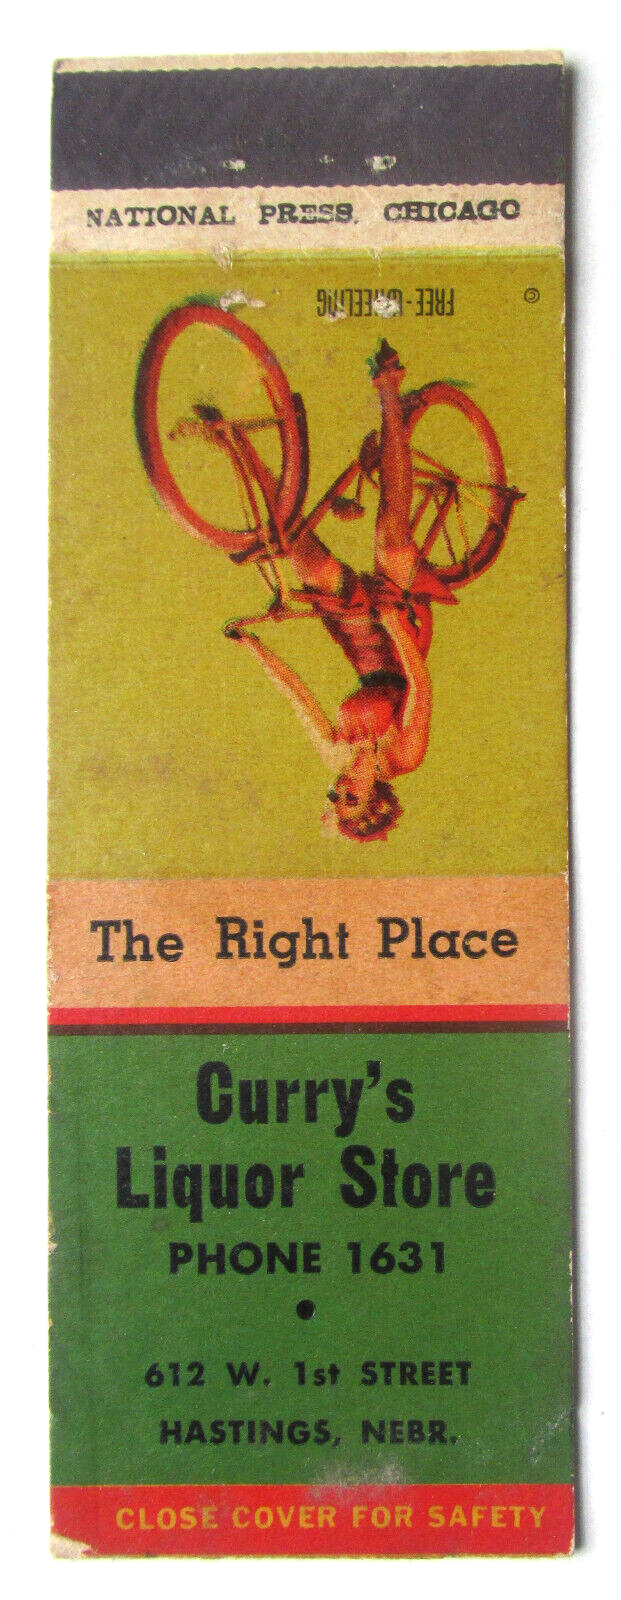 Curry's Liquor Store - Hastings, Nebraska 20 Strike Matchbook Cover Pinup Girlie - $2.00